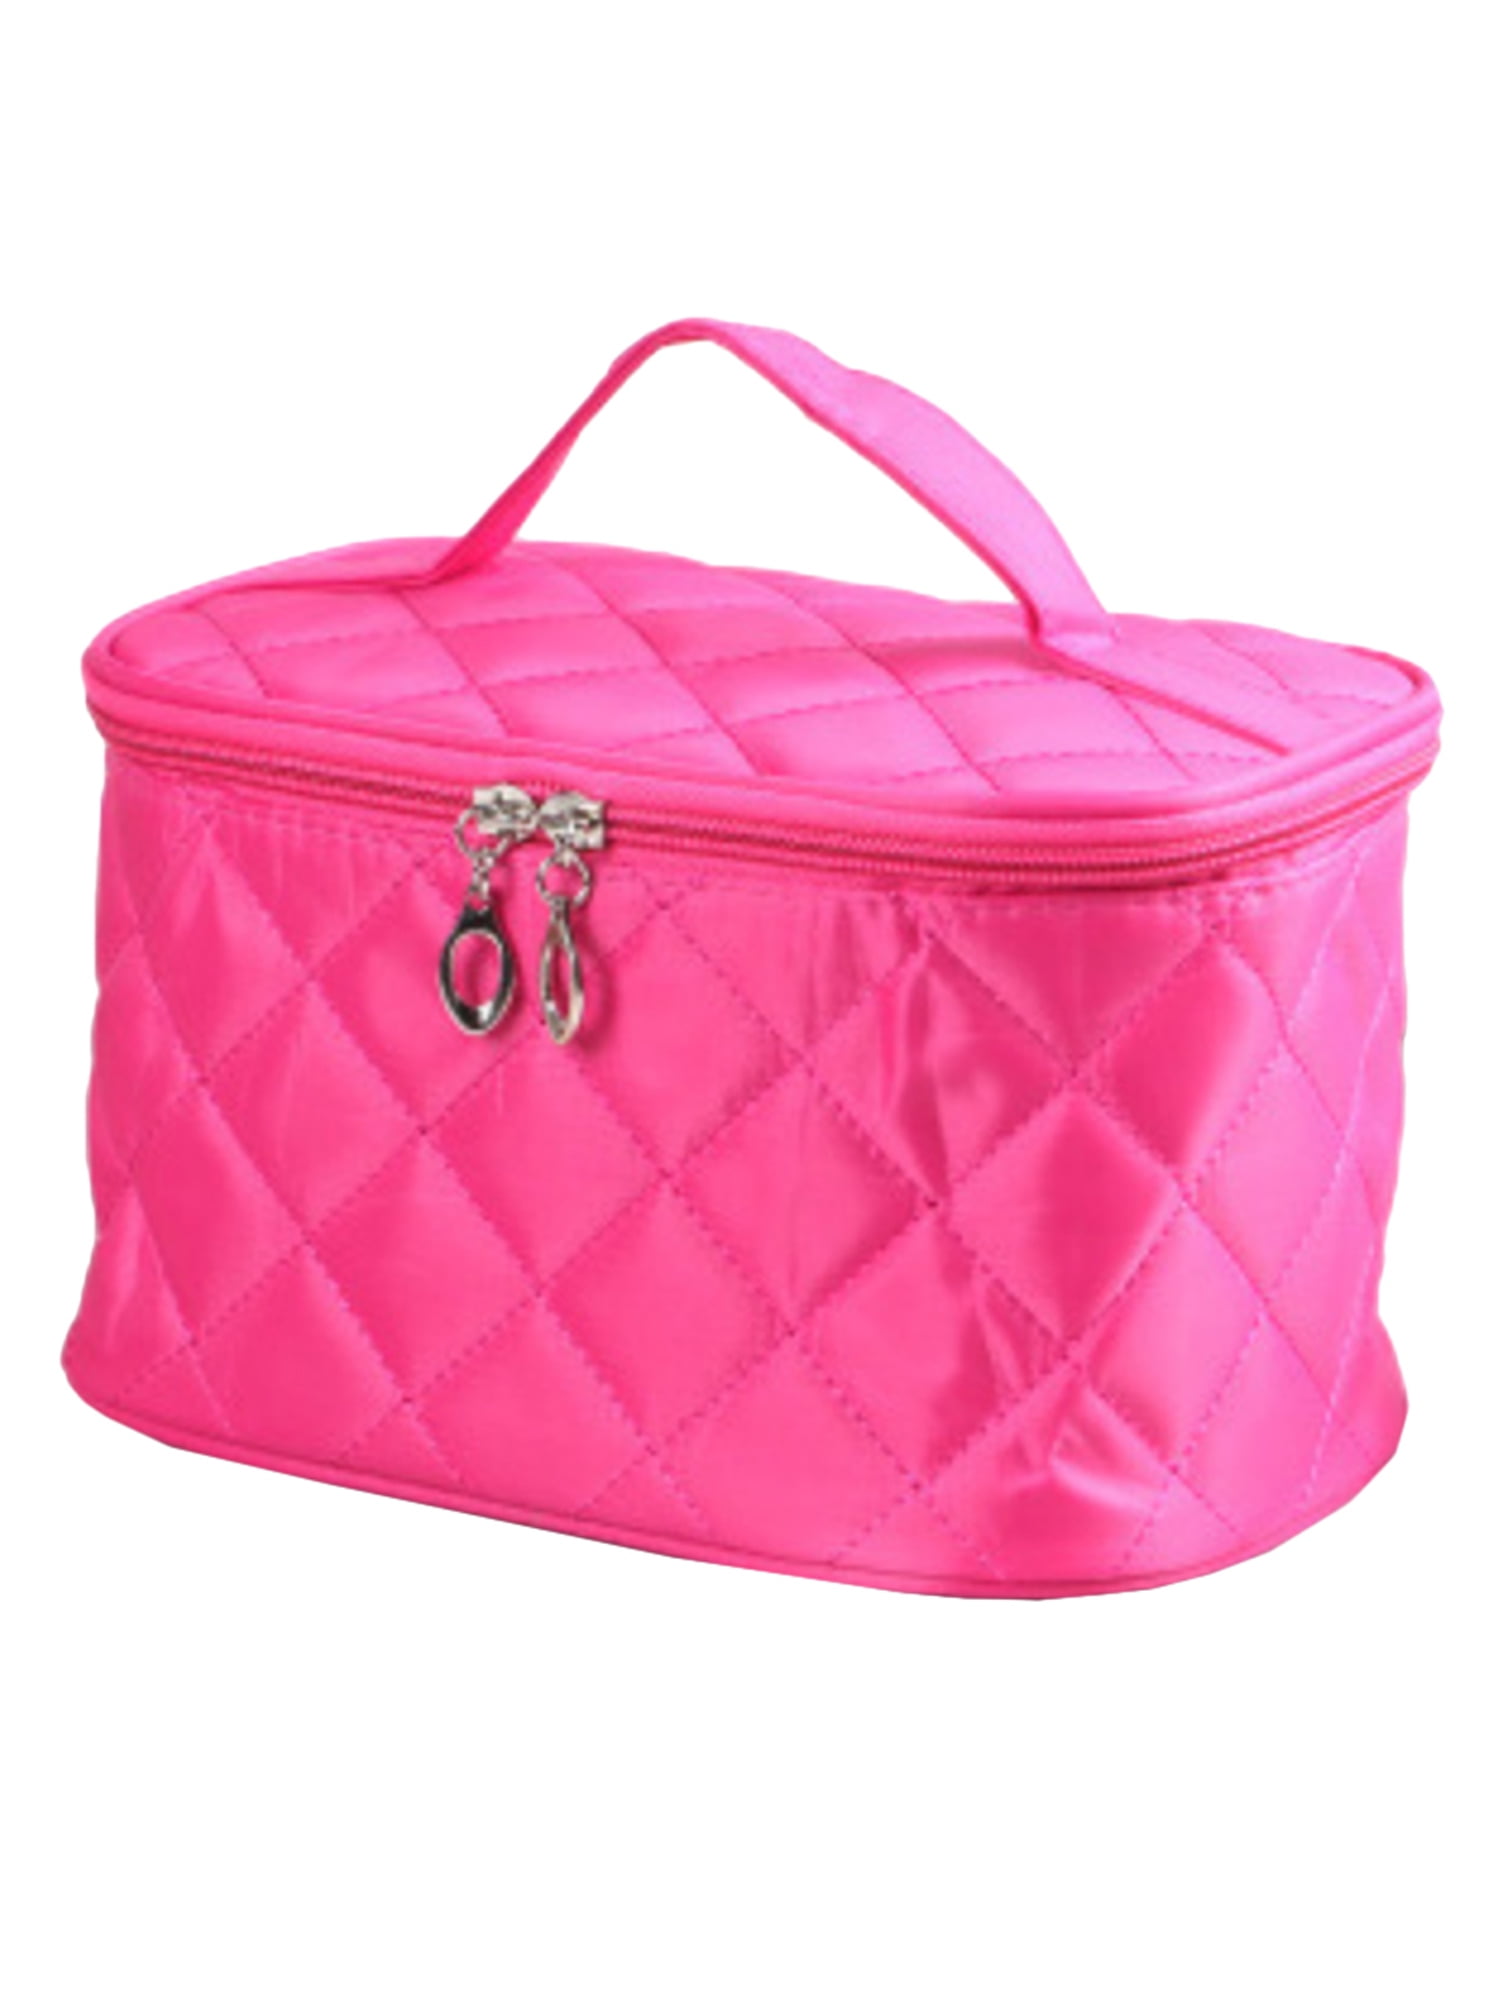 Women's Travel Makeup Plain Portable Cosmetic Handbag Nylon Pouch ...